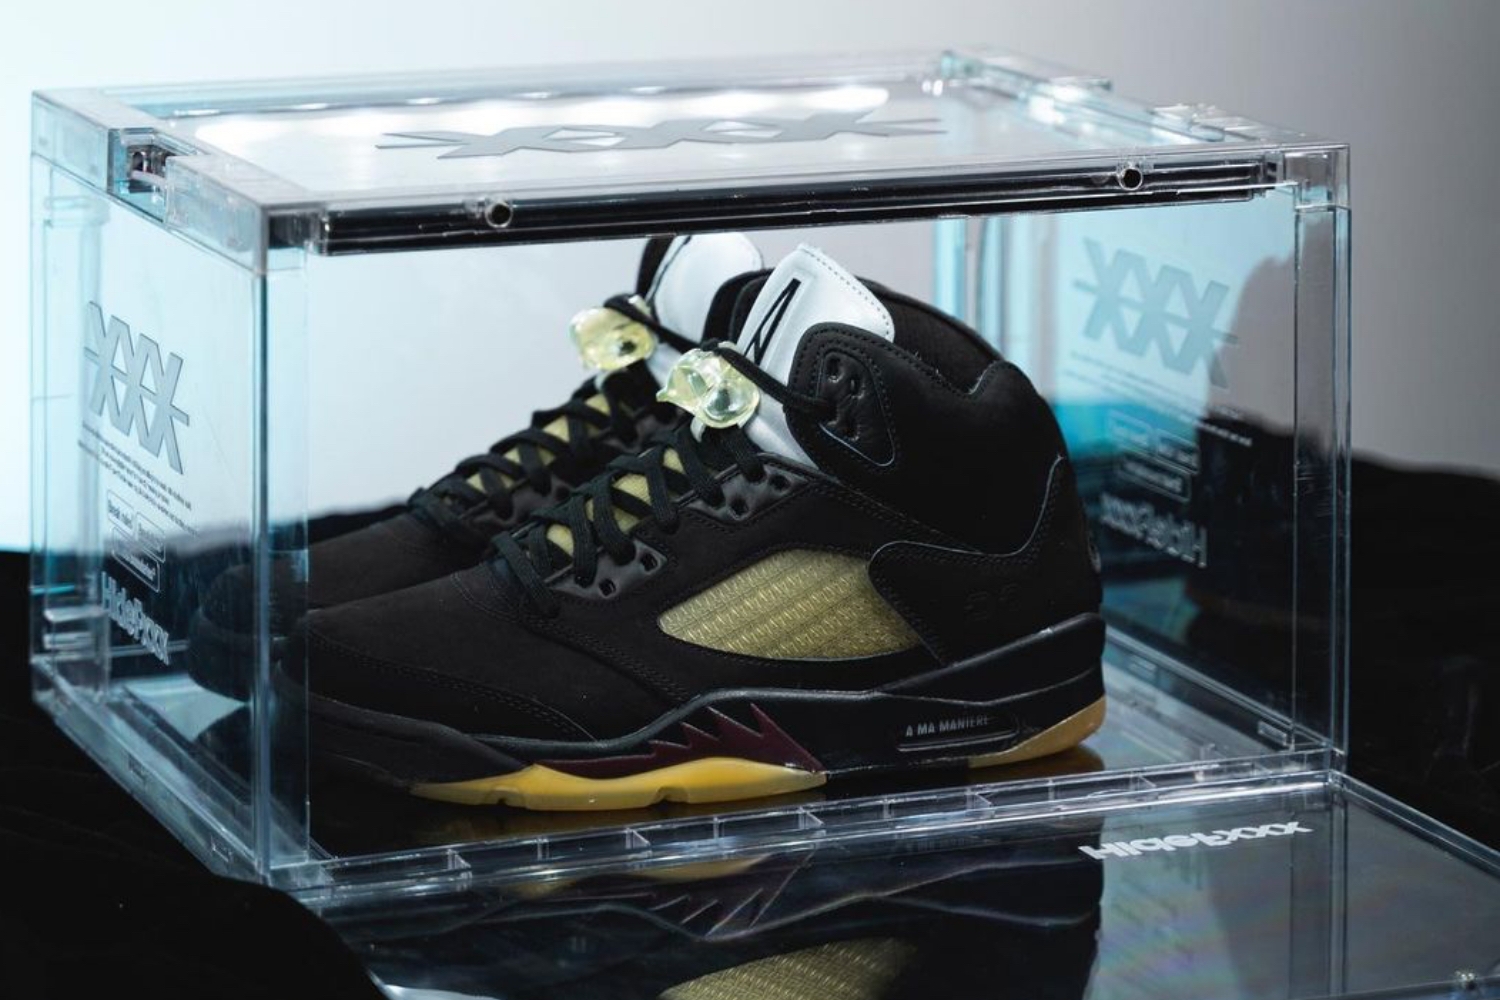 Up-close Bilder des neuen A Ma Maniére x Air Jordan 5 'Black'